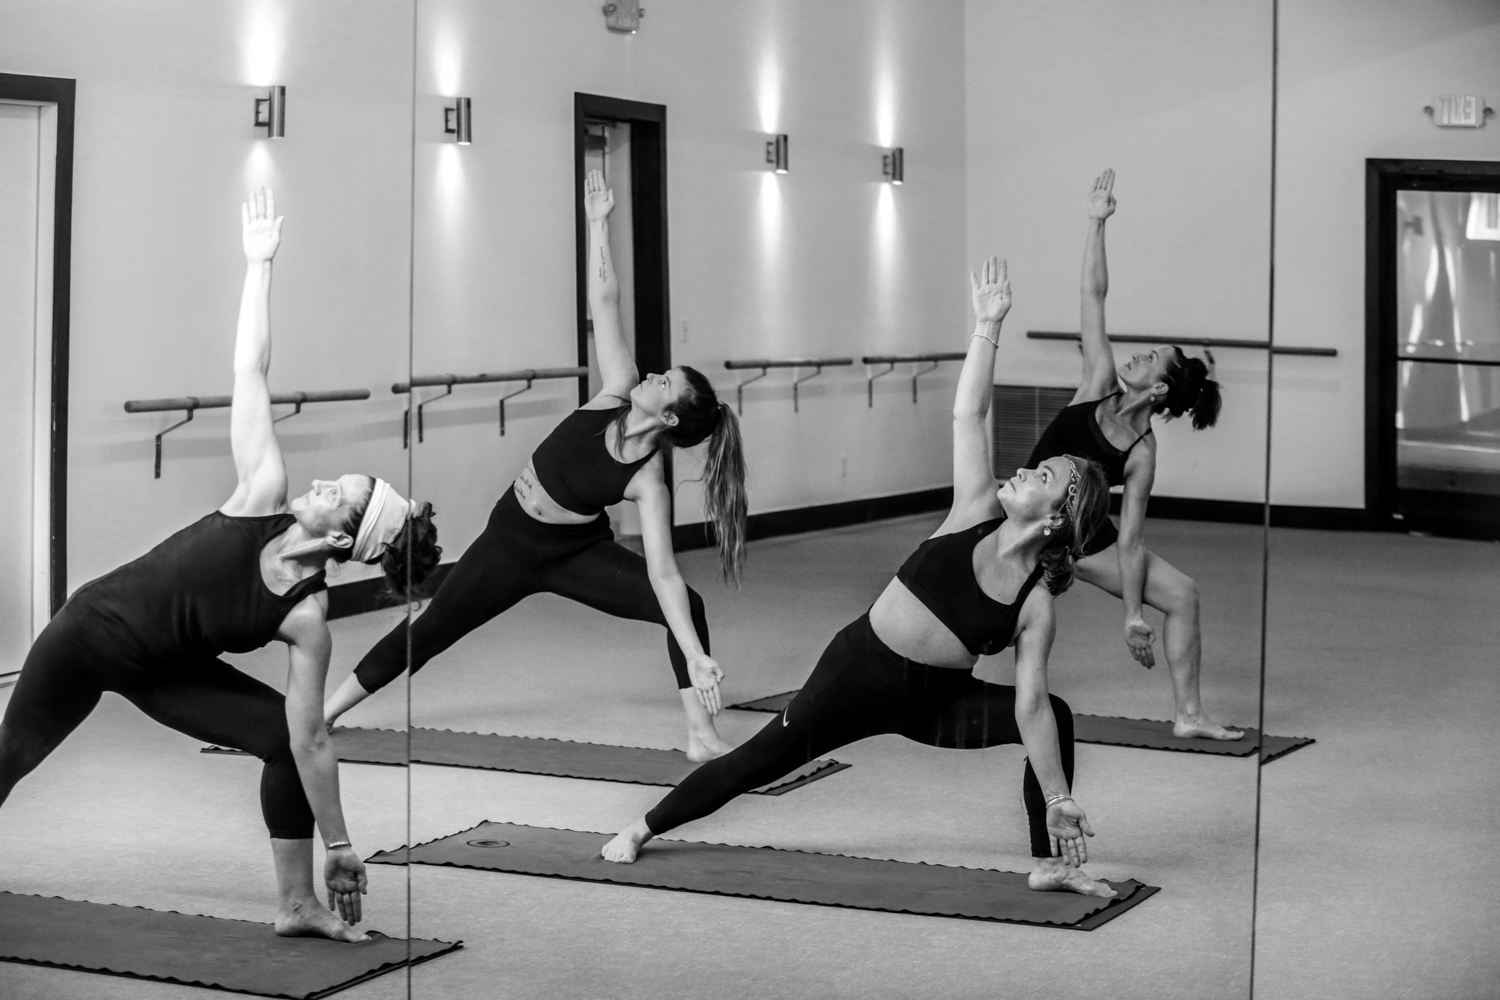 5, 10, or 20 Yoga Classes at Bikram Yoga Aurora (Up to 75% Off)